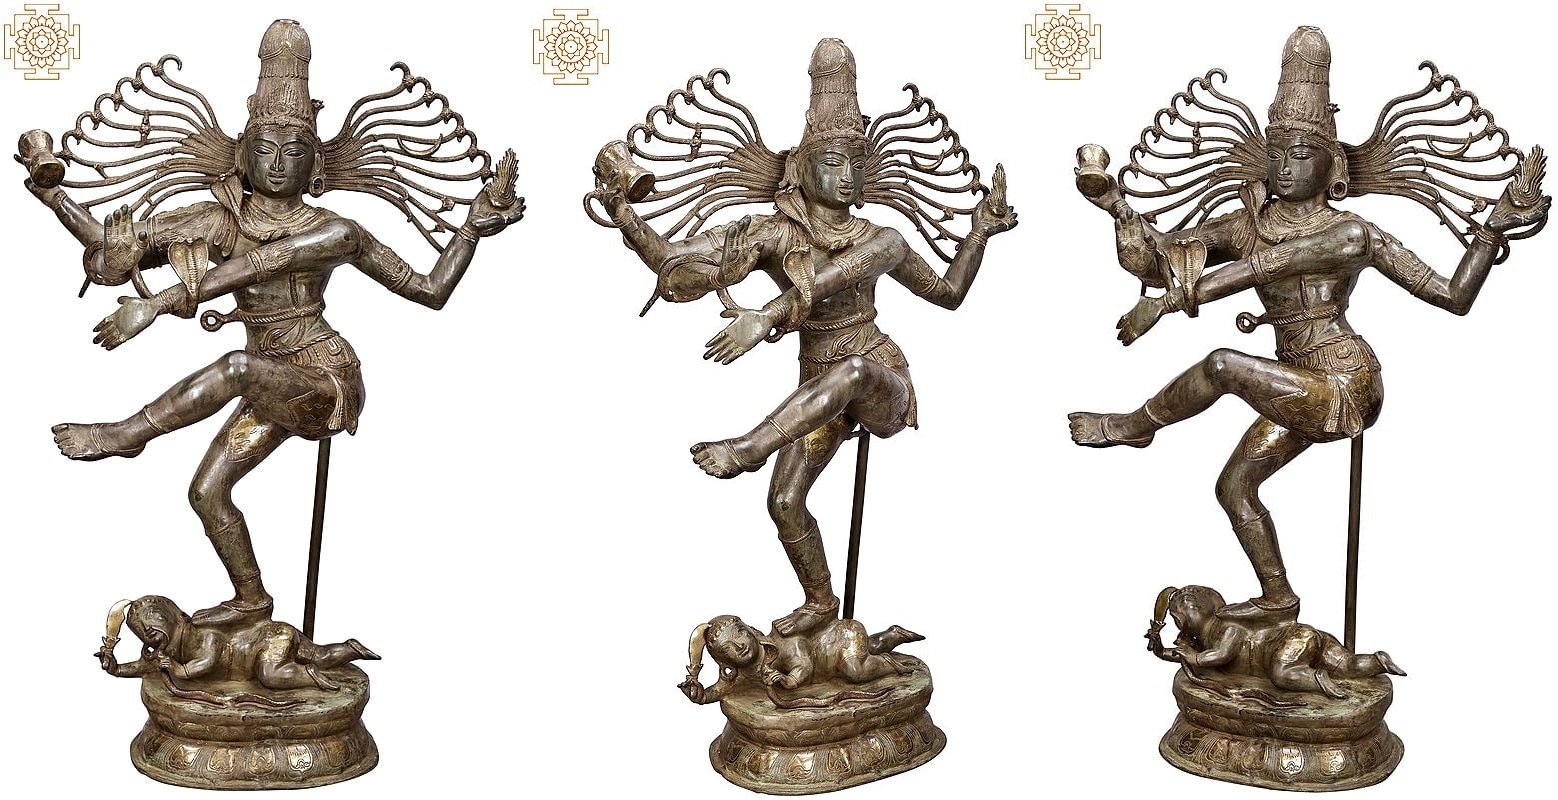 Natraja: The Dance of Lord Shiva's Cosmic Energy